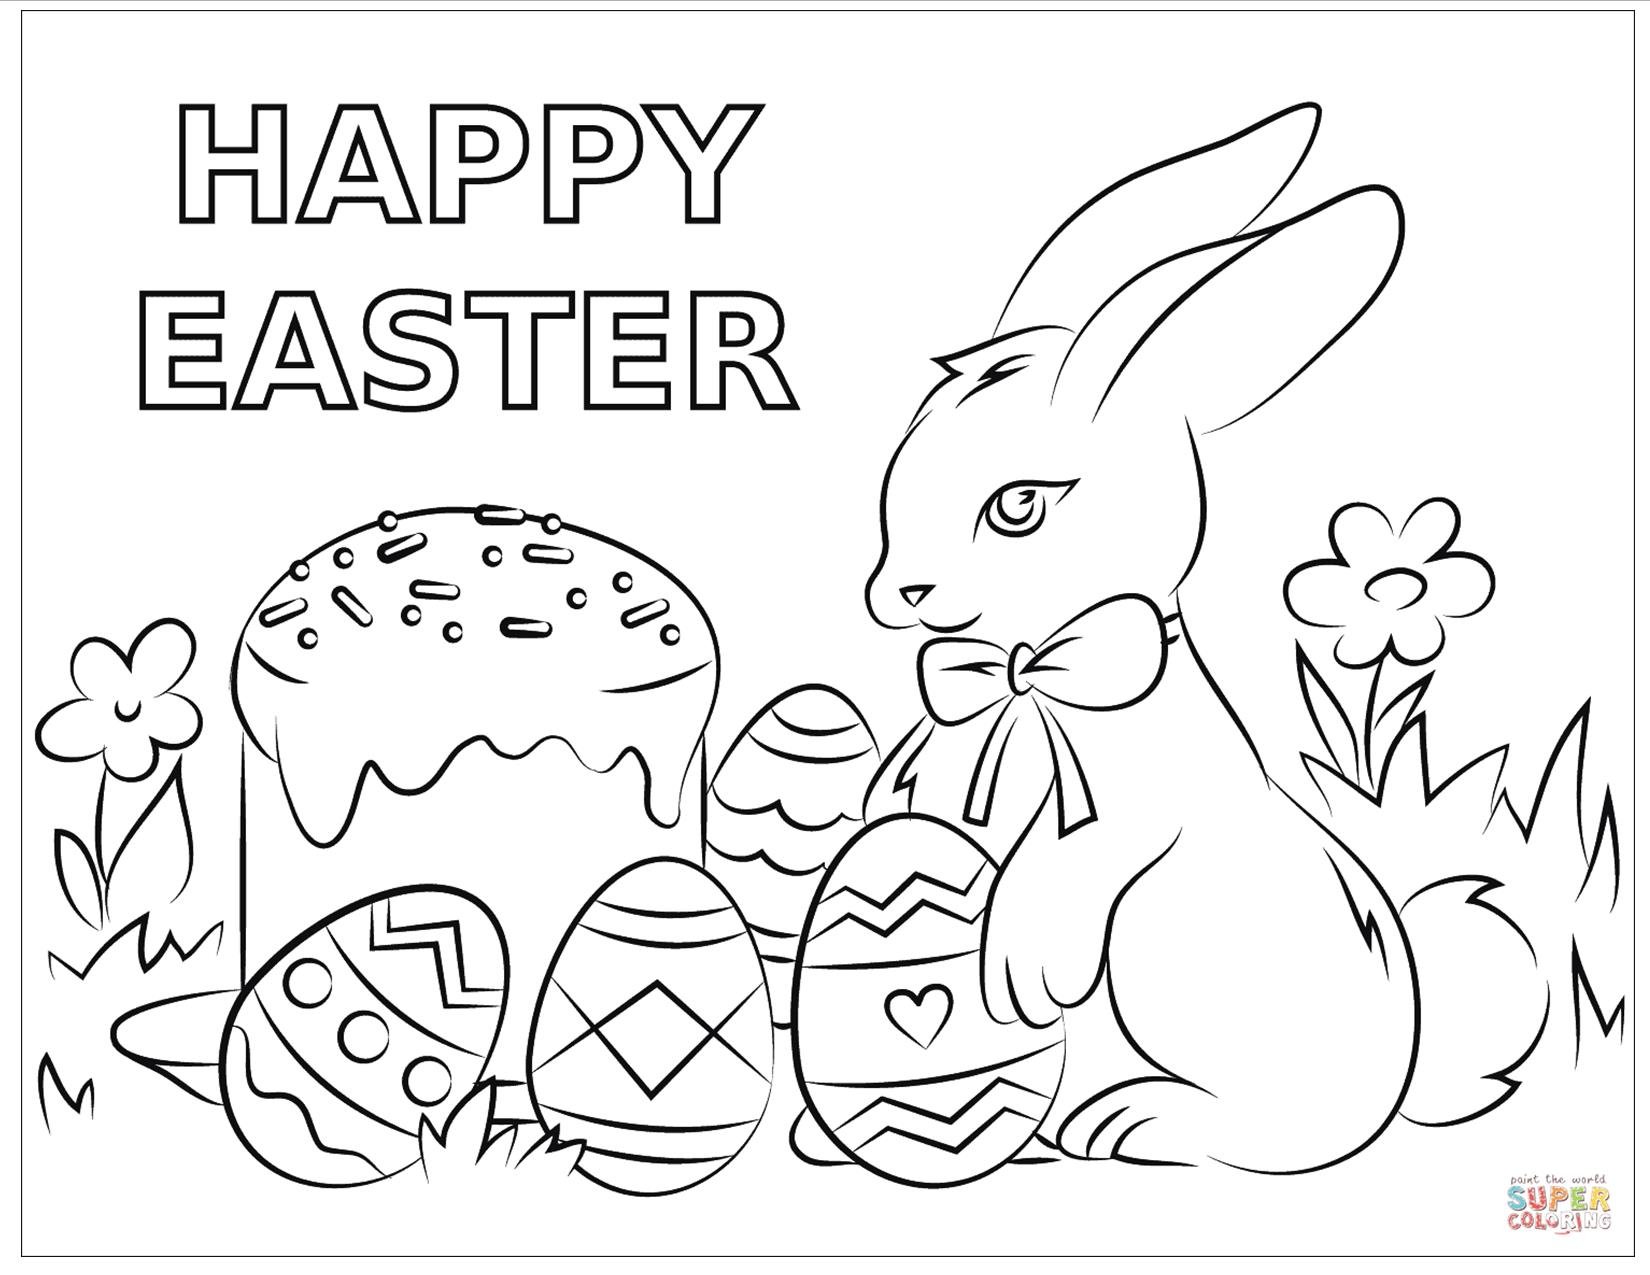 Happy Easter раскраска